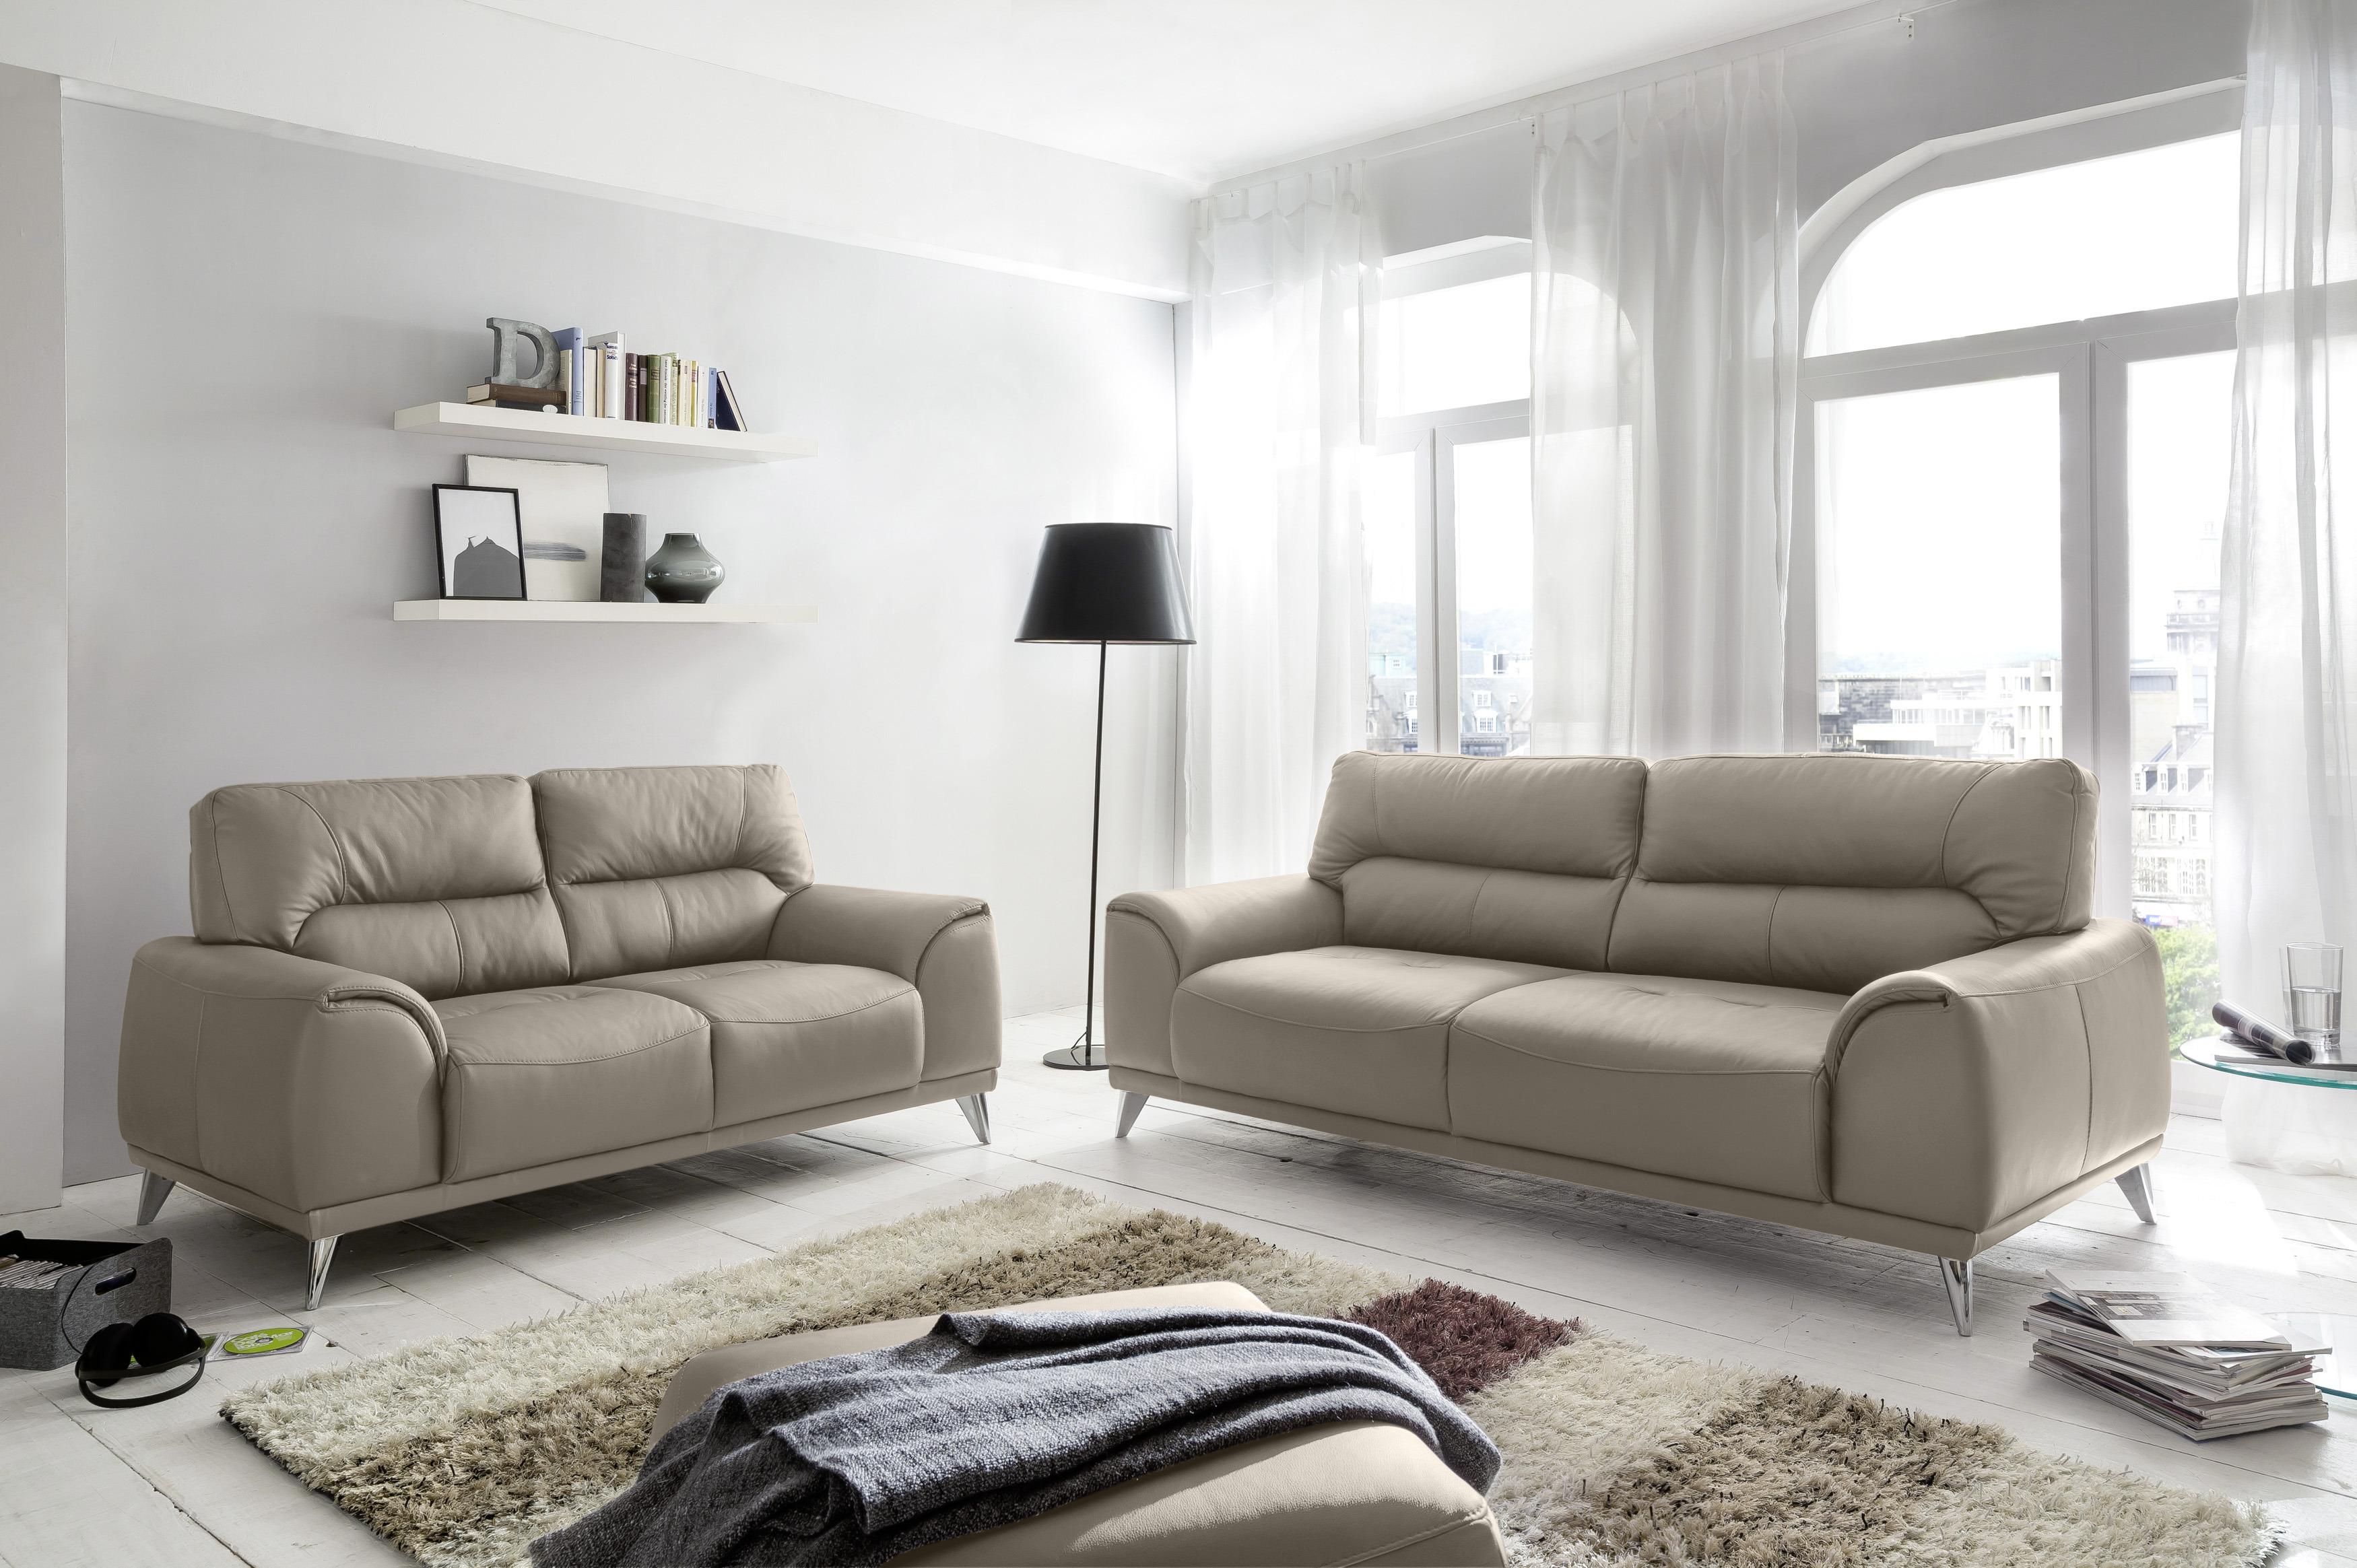 Zweisitzer-Sofa Frisco, Lederlook - Sandfarben/Chromfarben, MODERN, Textil (166/92/96cm) - MID.YOU